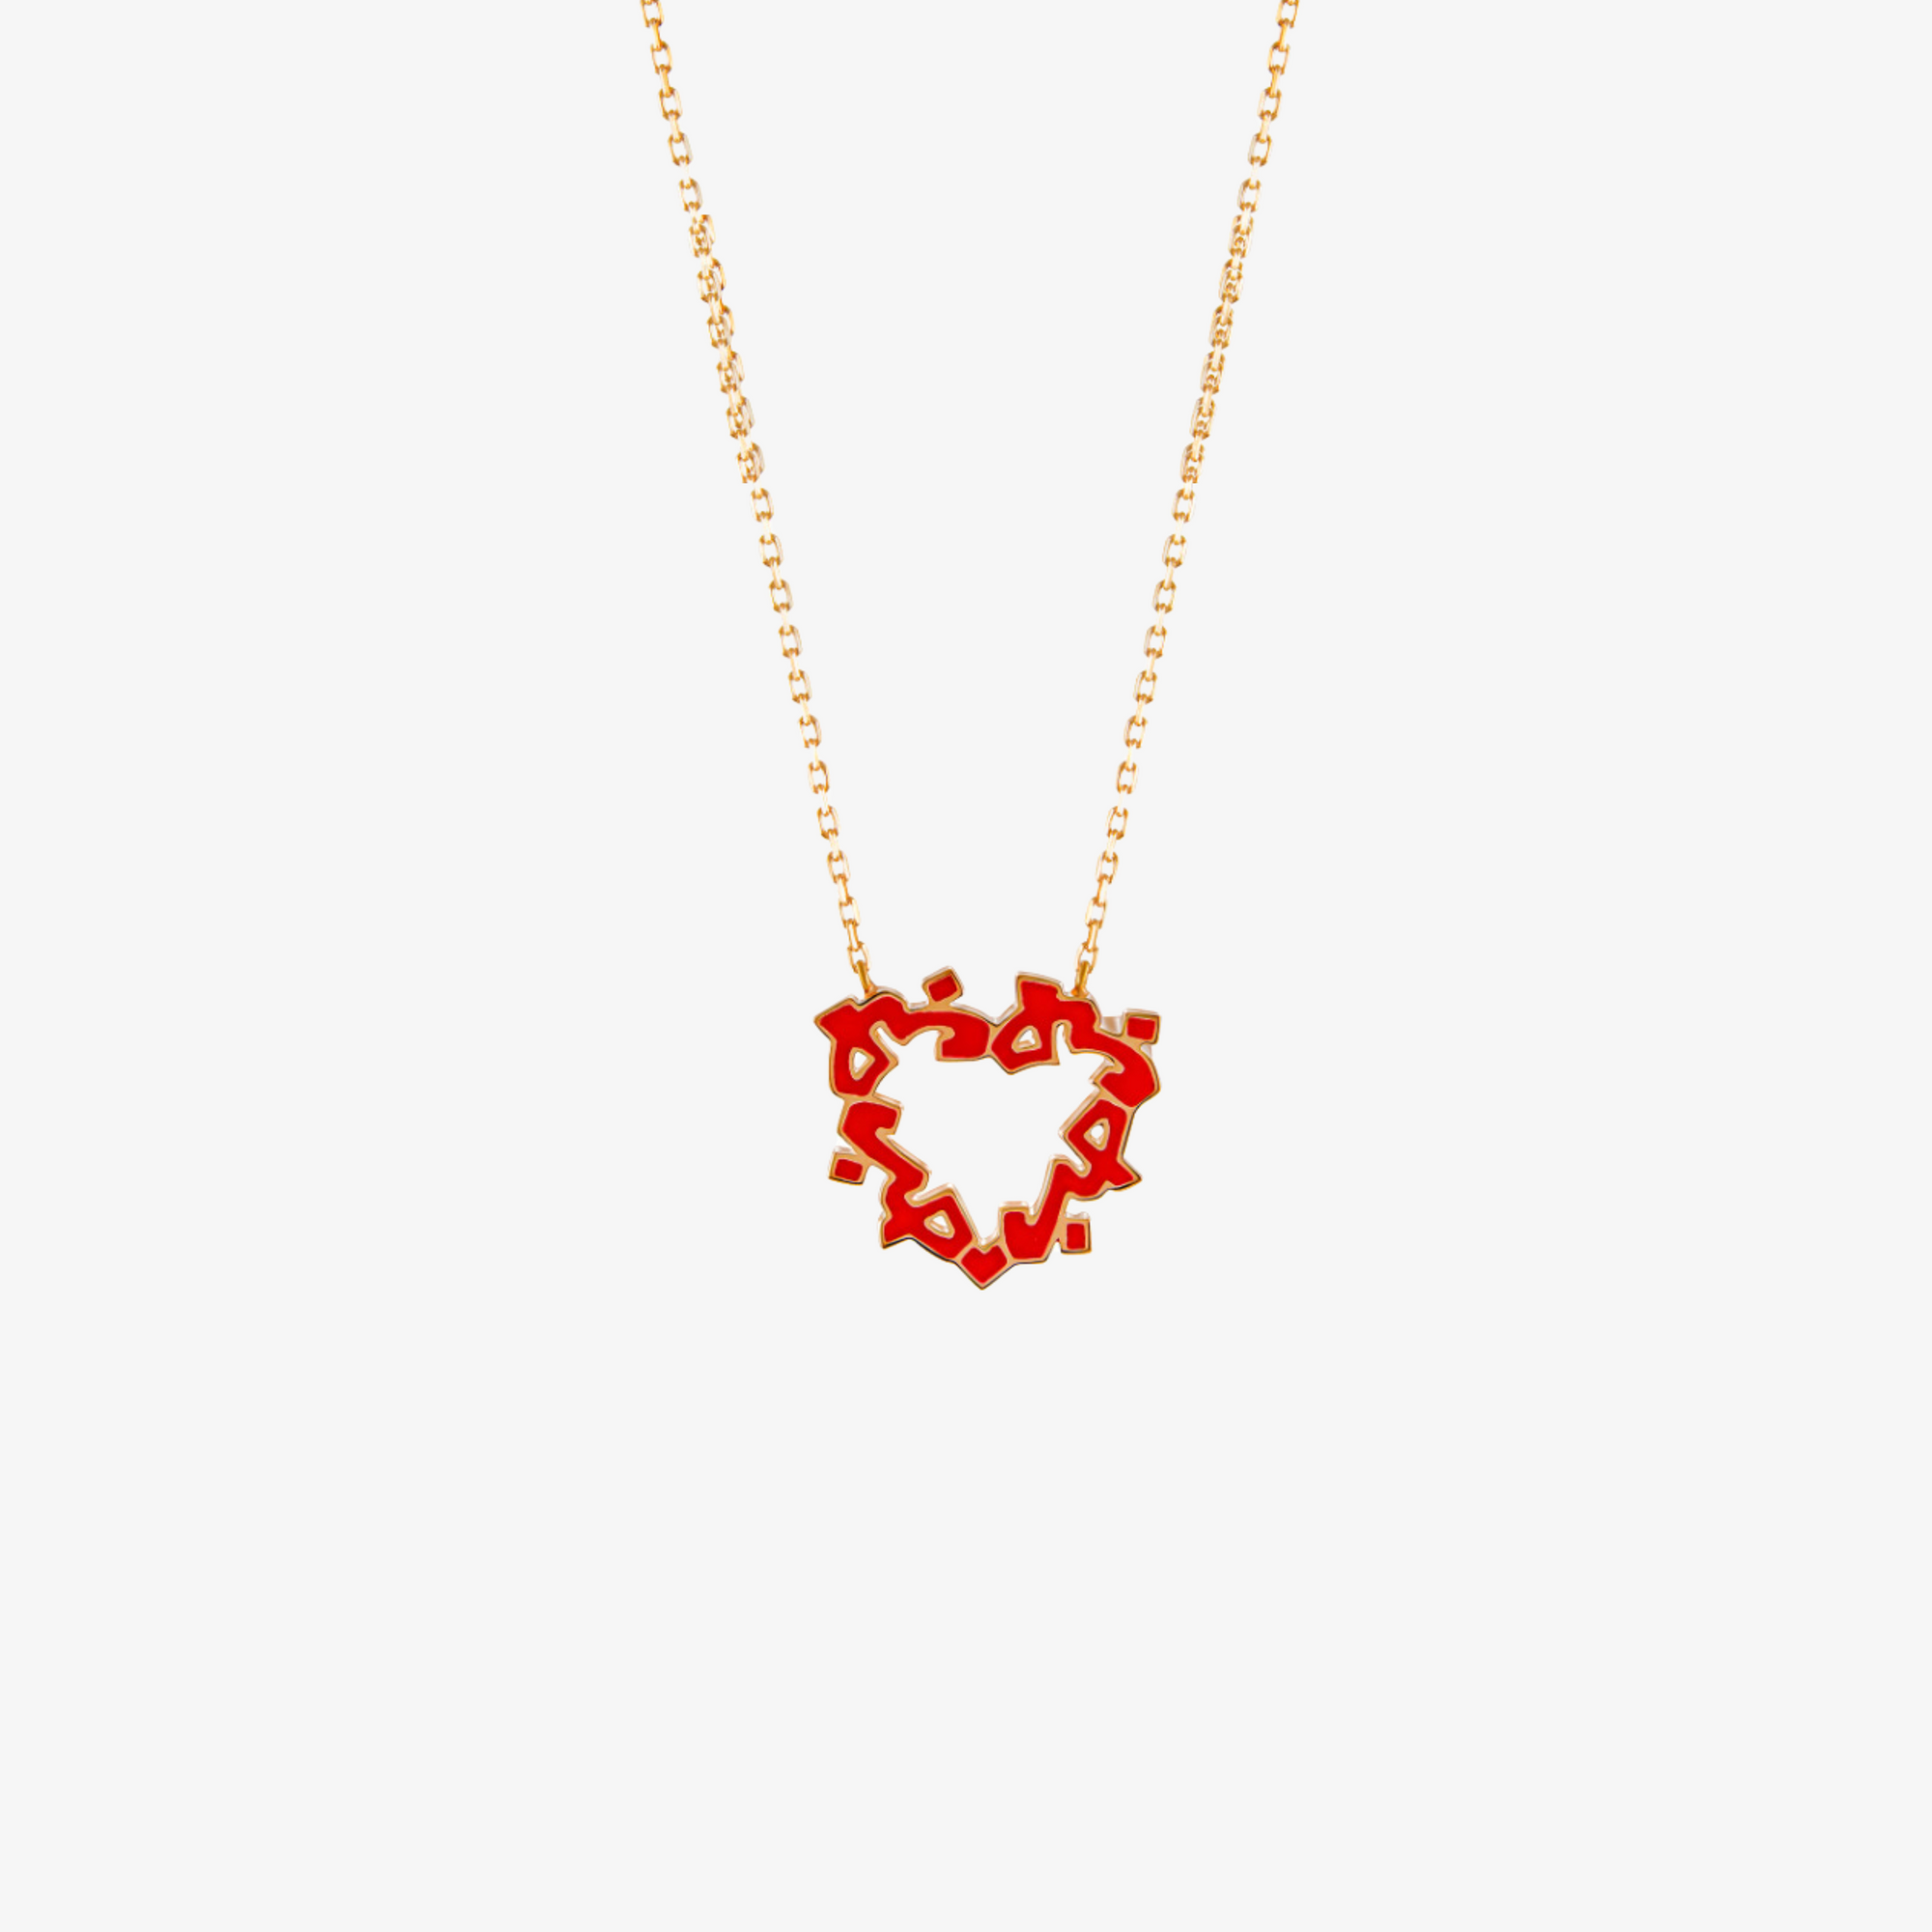 HOBB — 18K Gold Heart Shaped Enamel “Love” Necklace